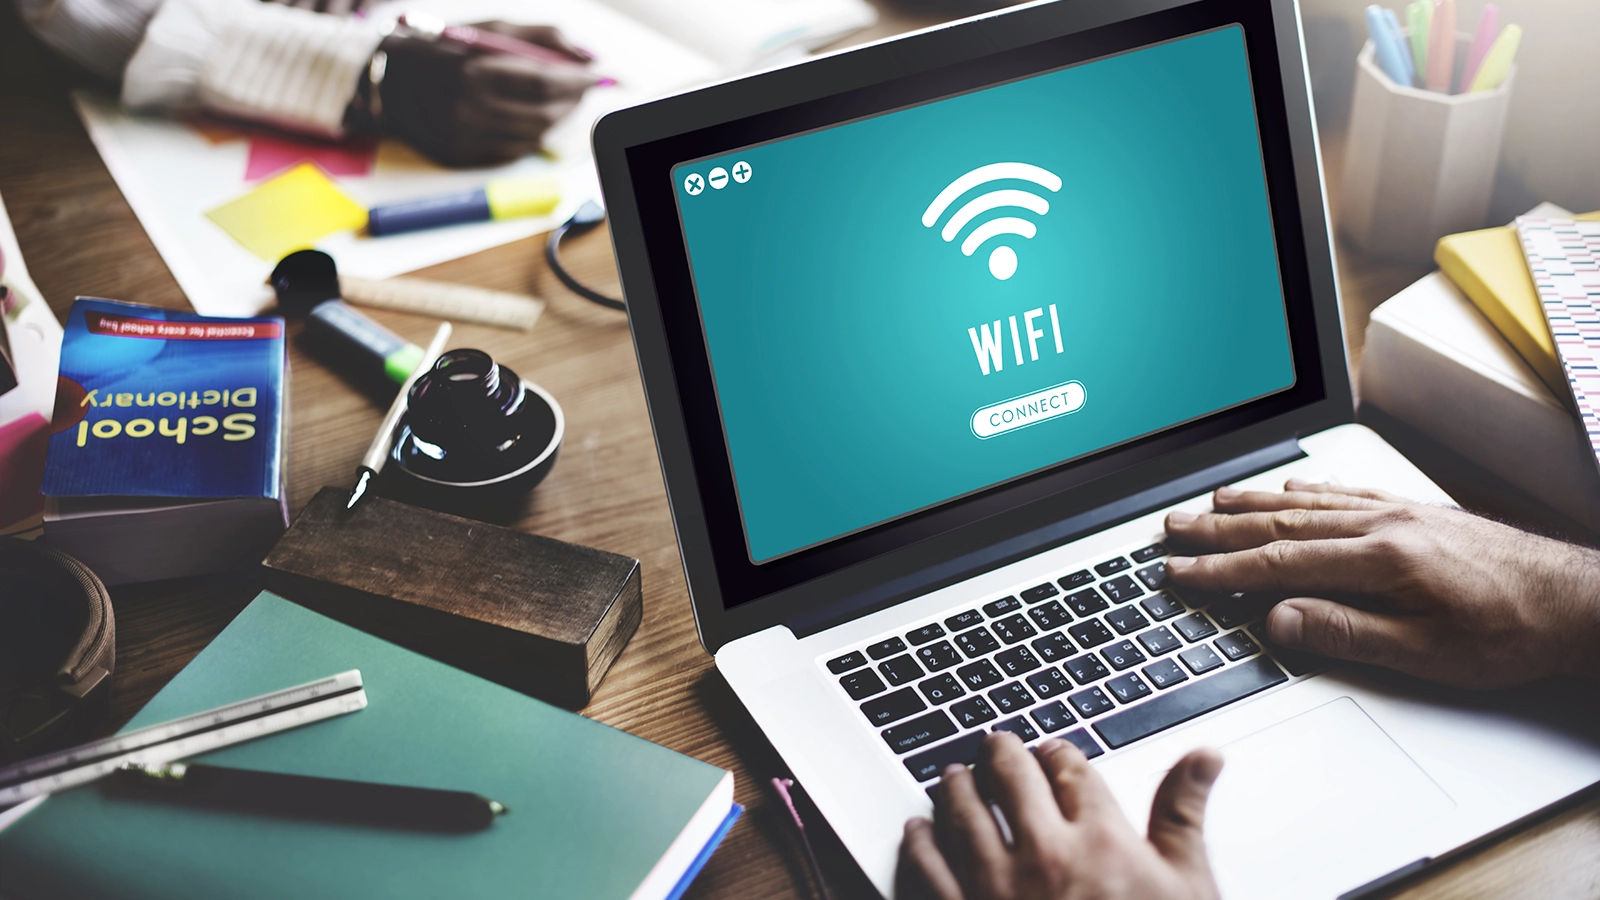 WiFi Speed Test: What’s a good WiFi Speed?